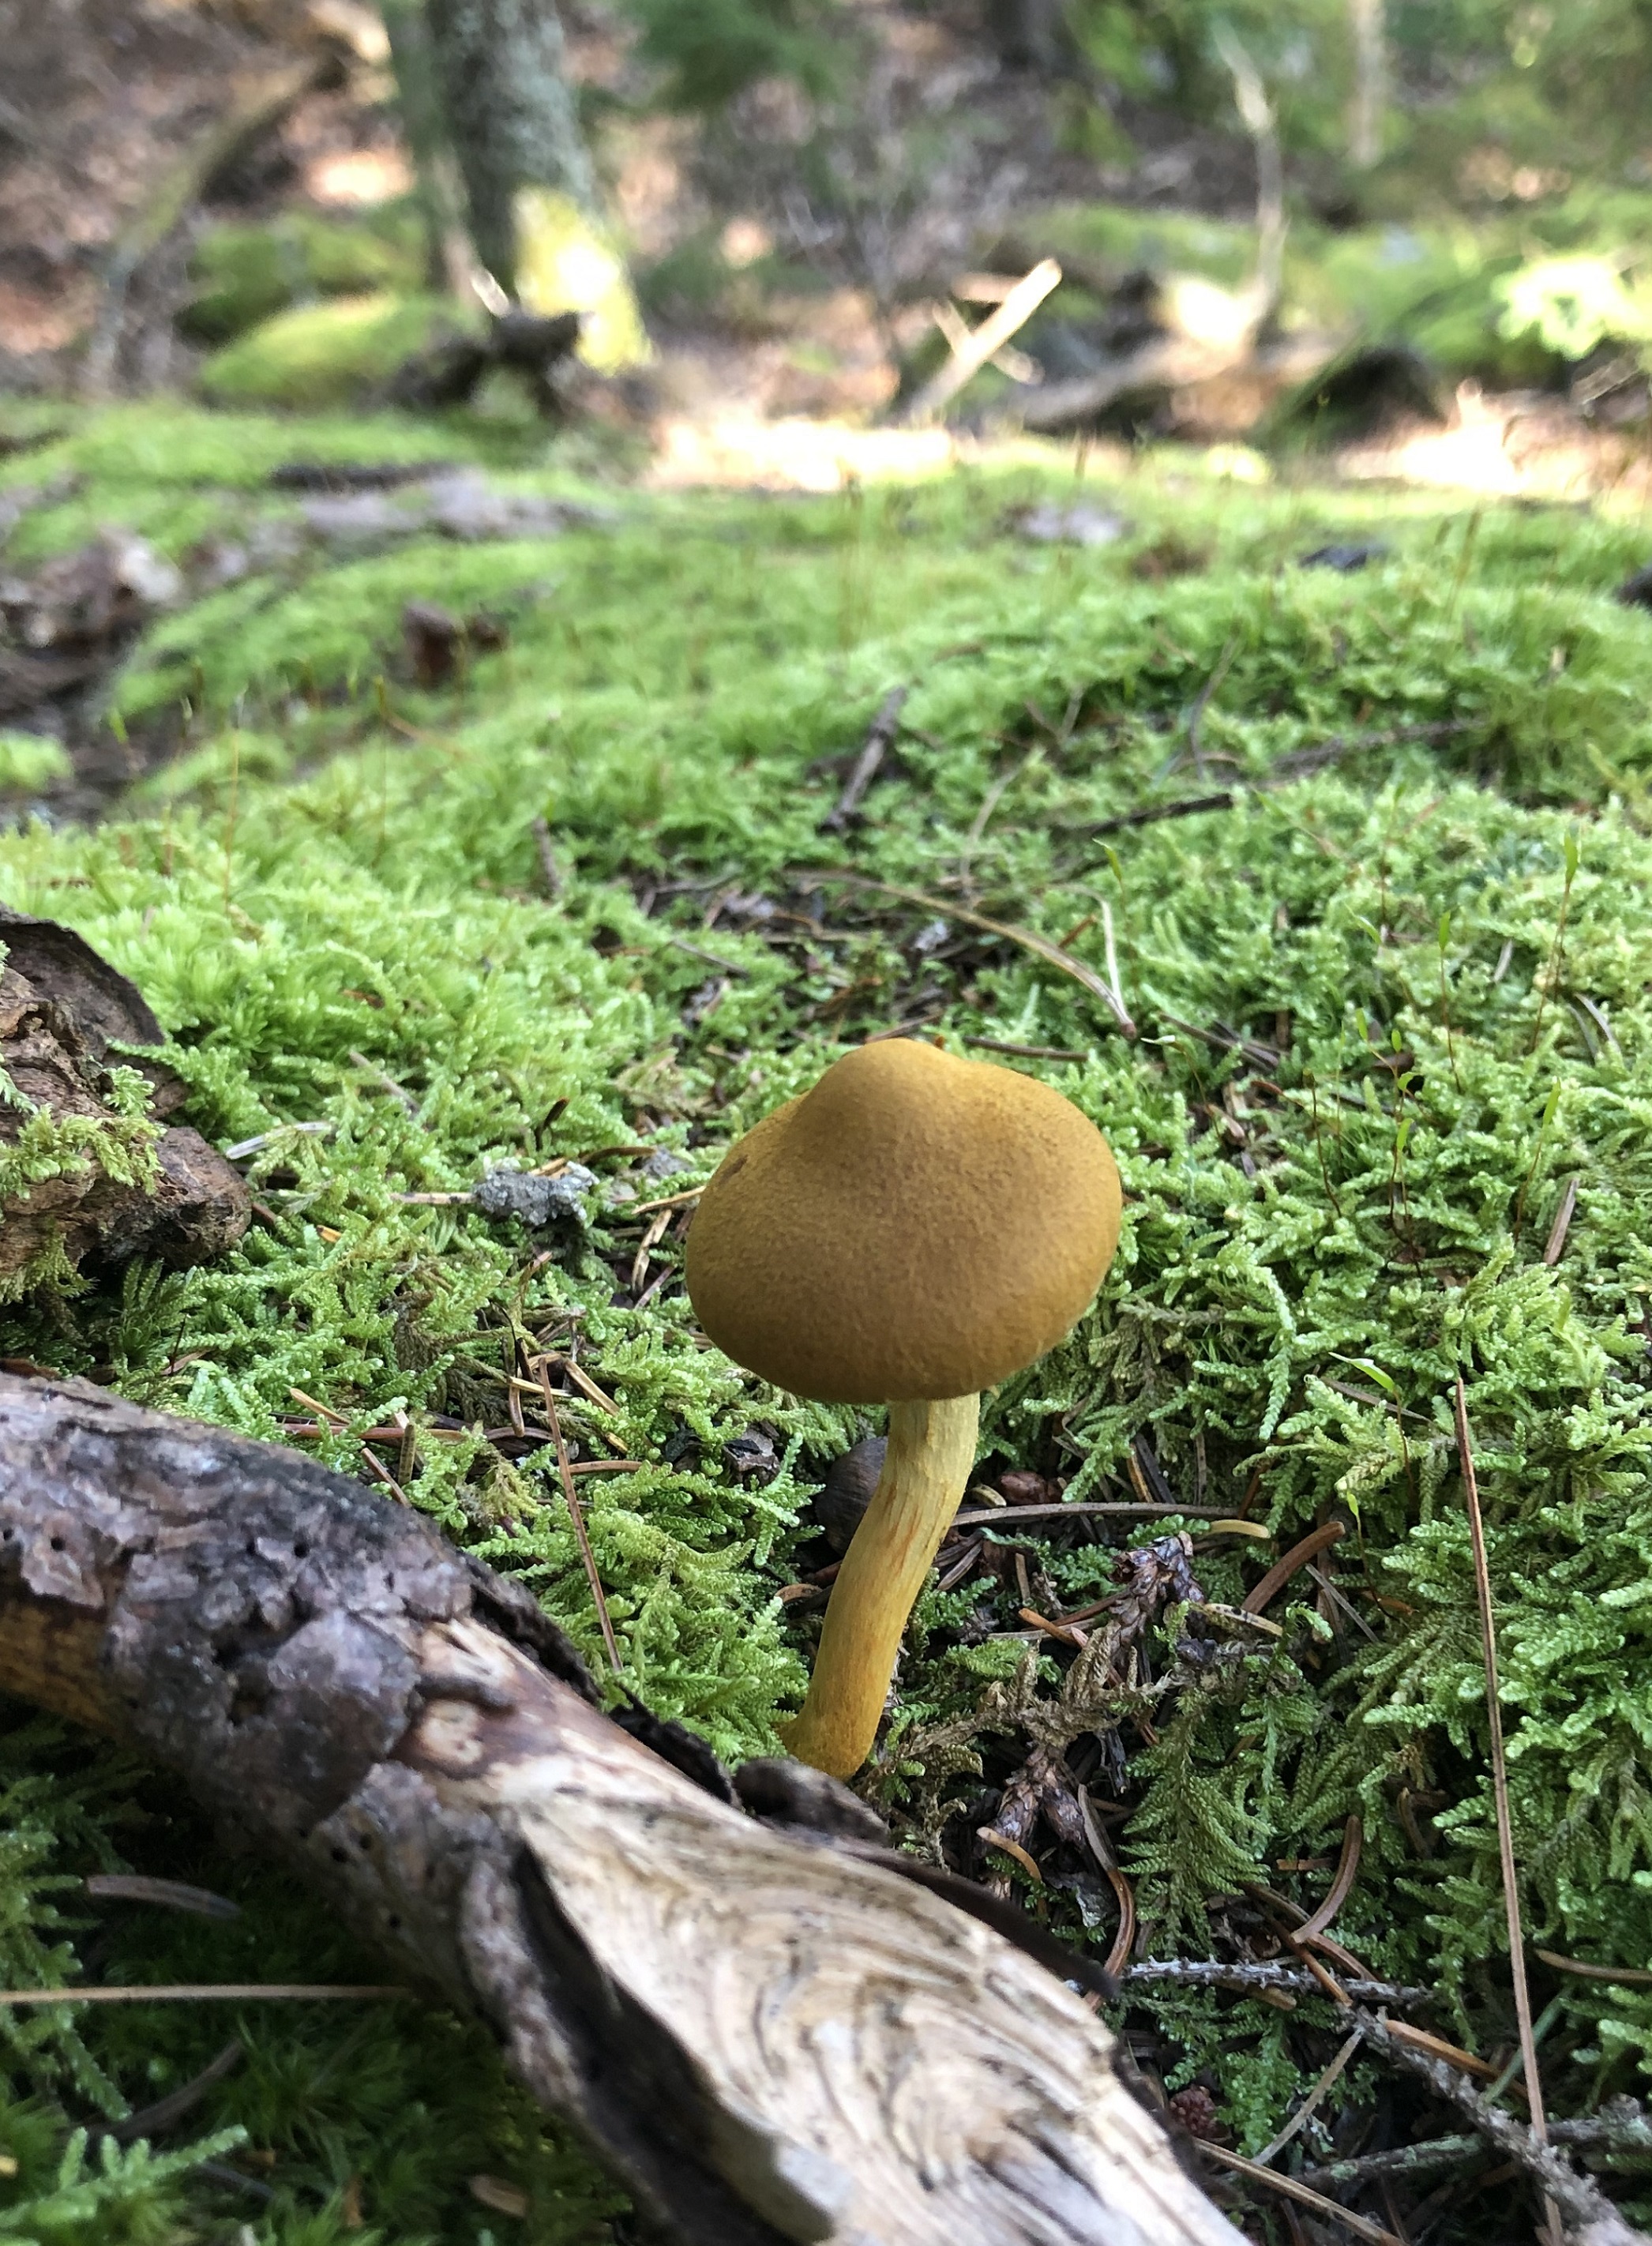 A mushroom growing in the woods